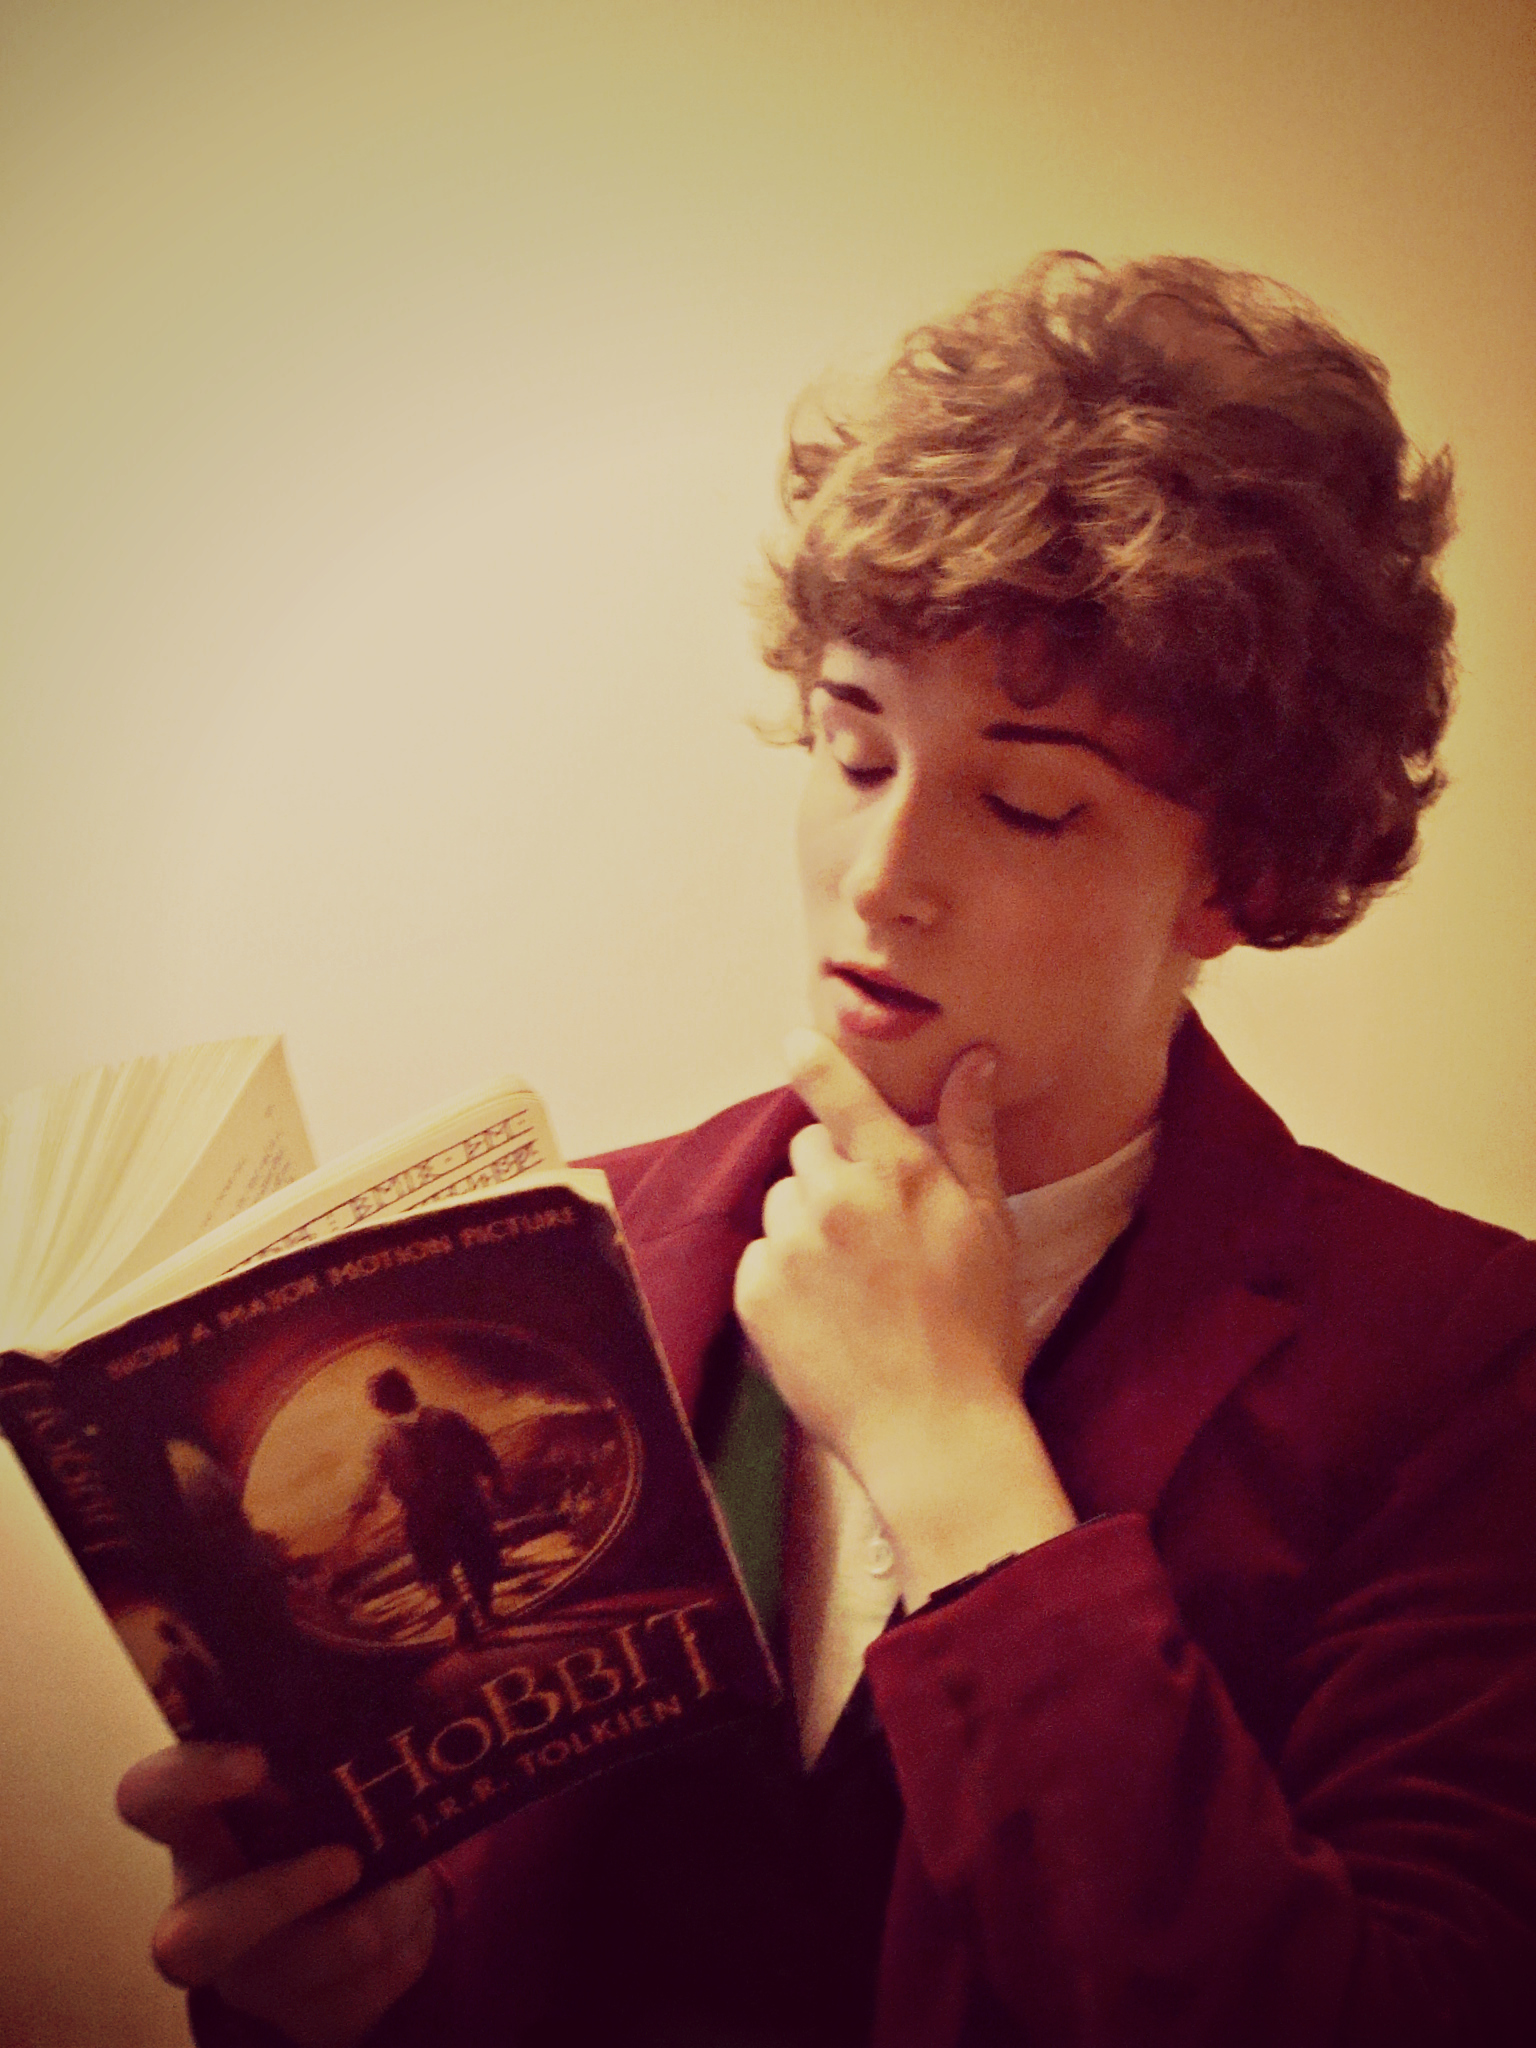 Me as Bilbo Baggins 4